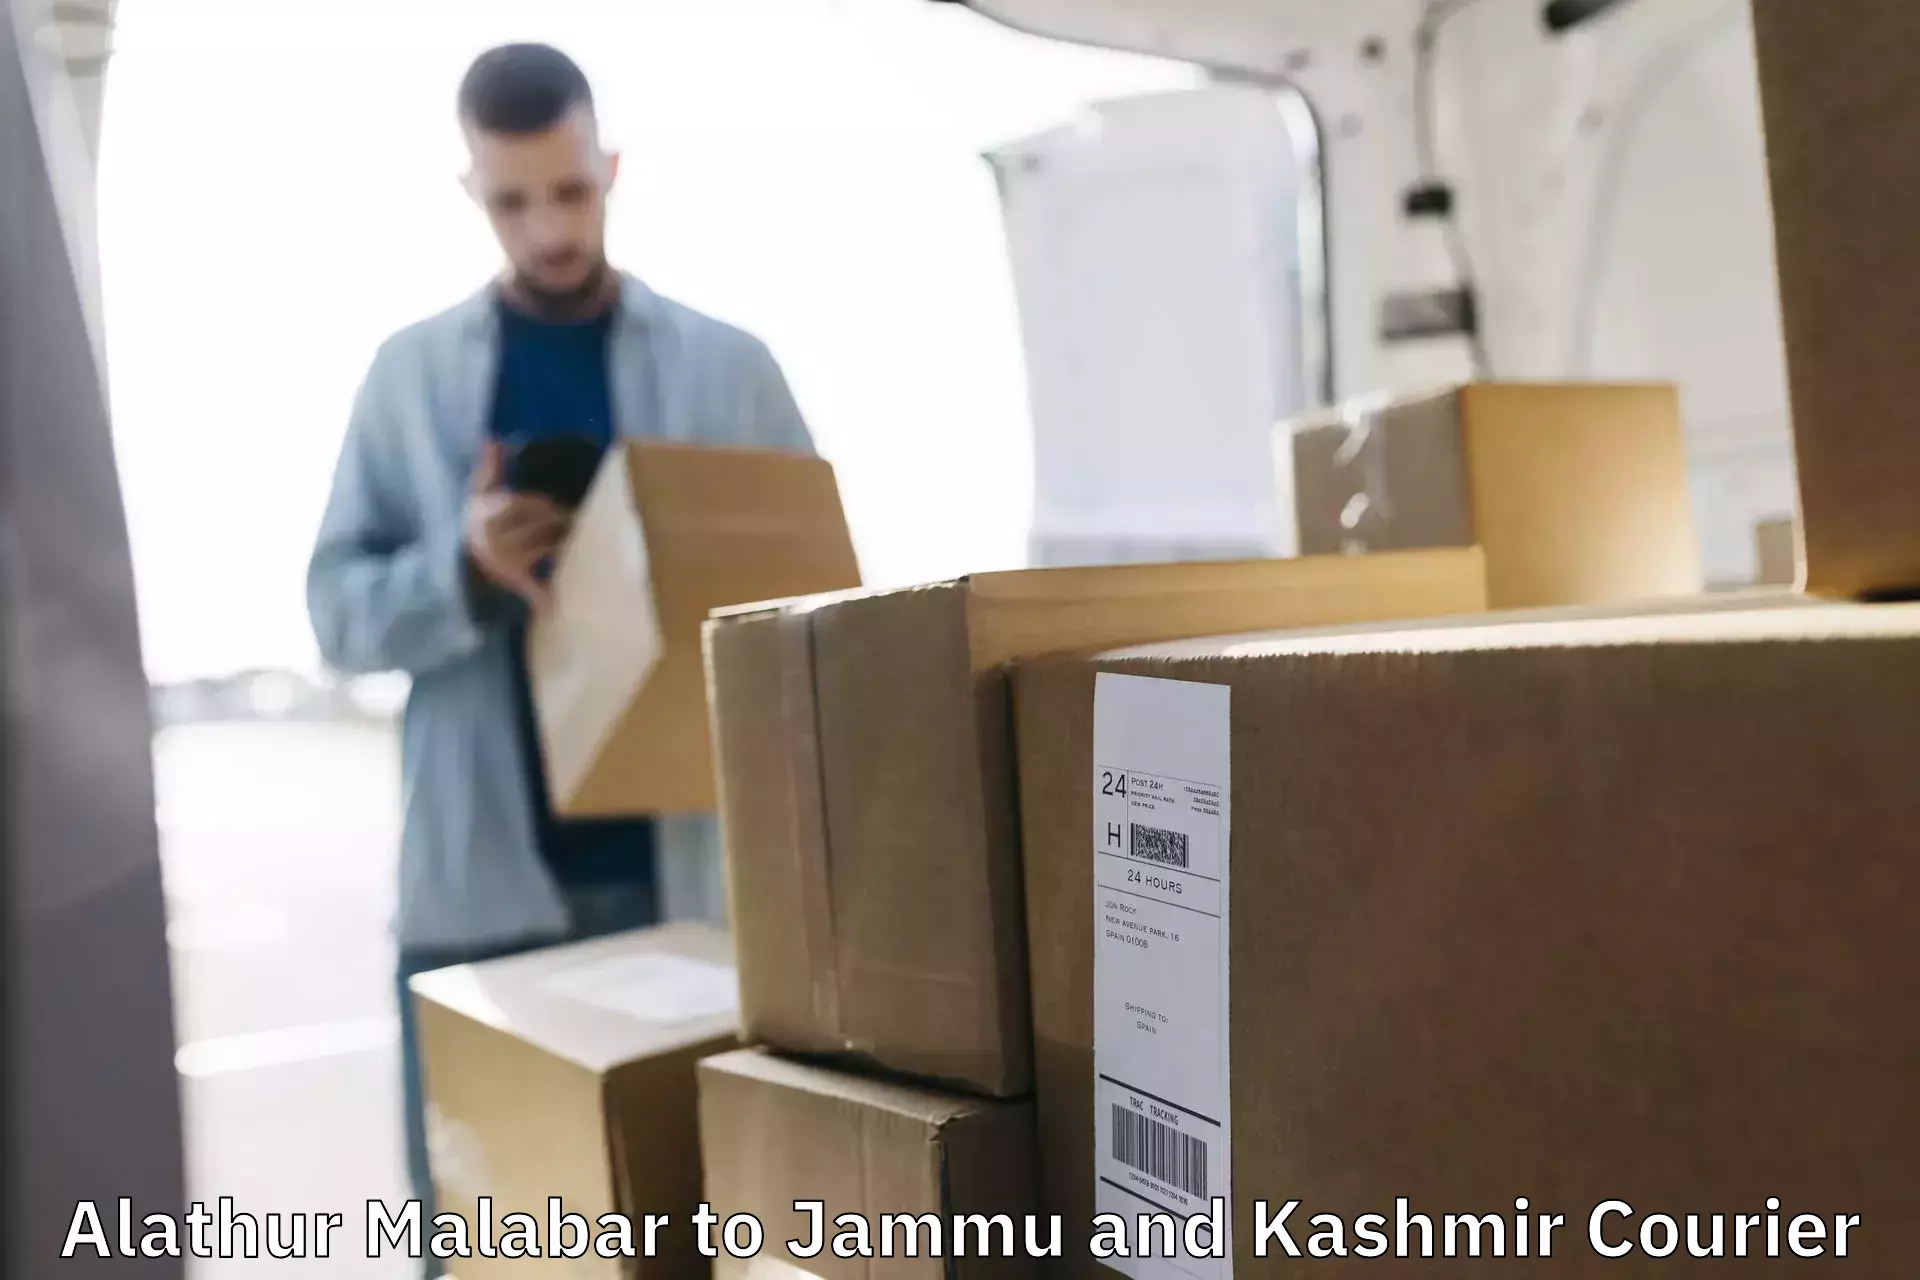 Express delivery network Alathur Malabar to Jammu and Kashmir